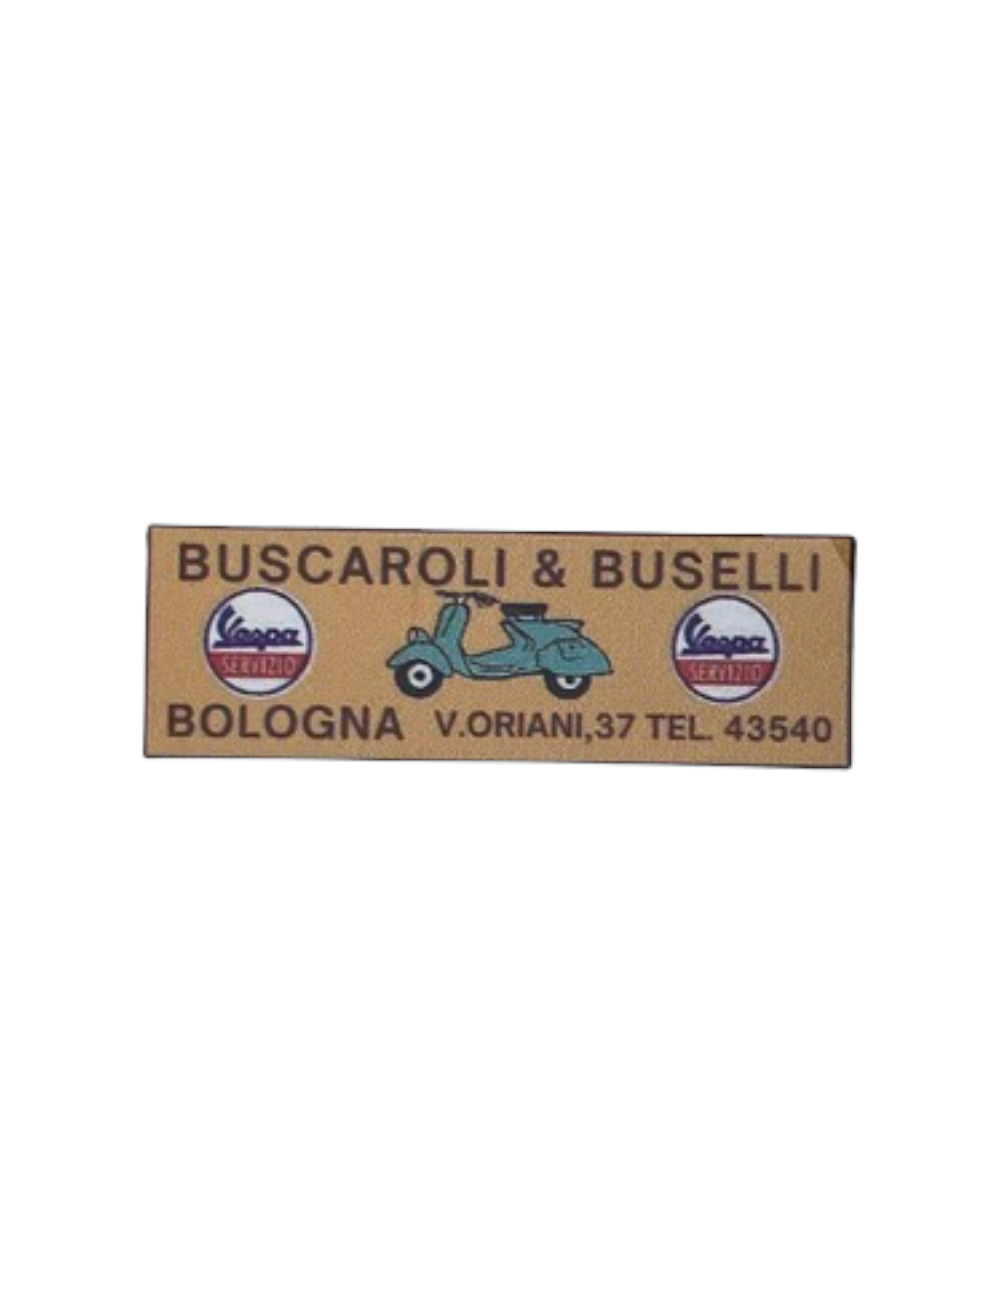 Adesivo concessionario Bucaroli & Buselli